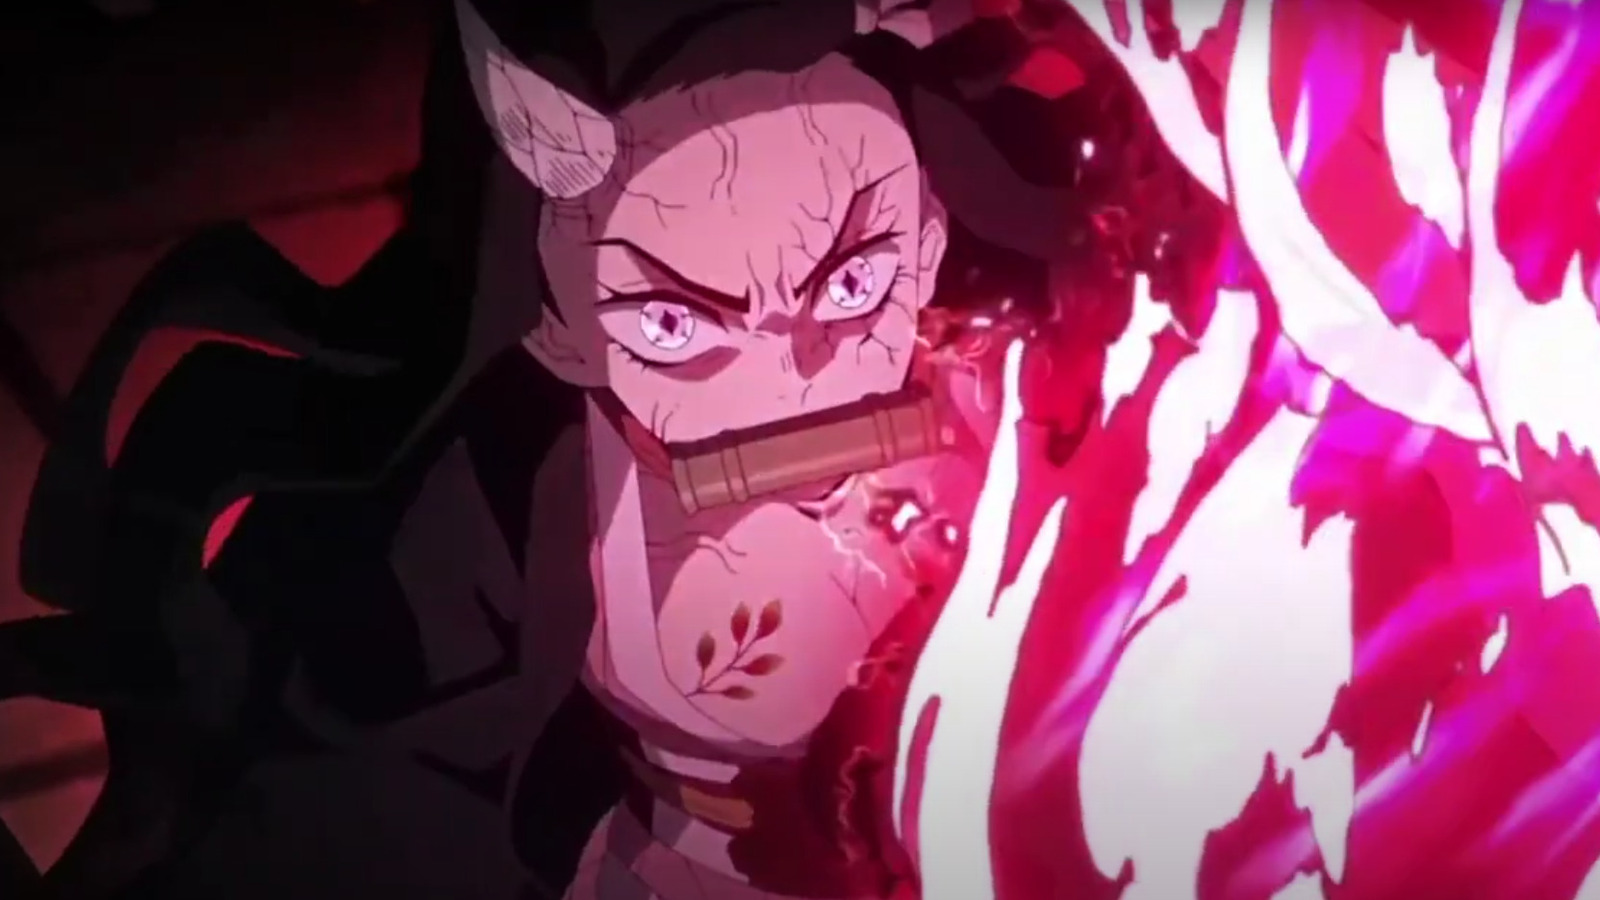 Demon Slayer anime will adapt the Swordsmith Village Arc in Season 3